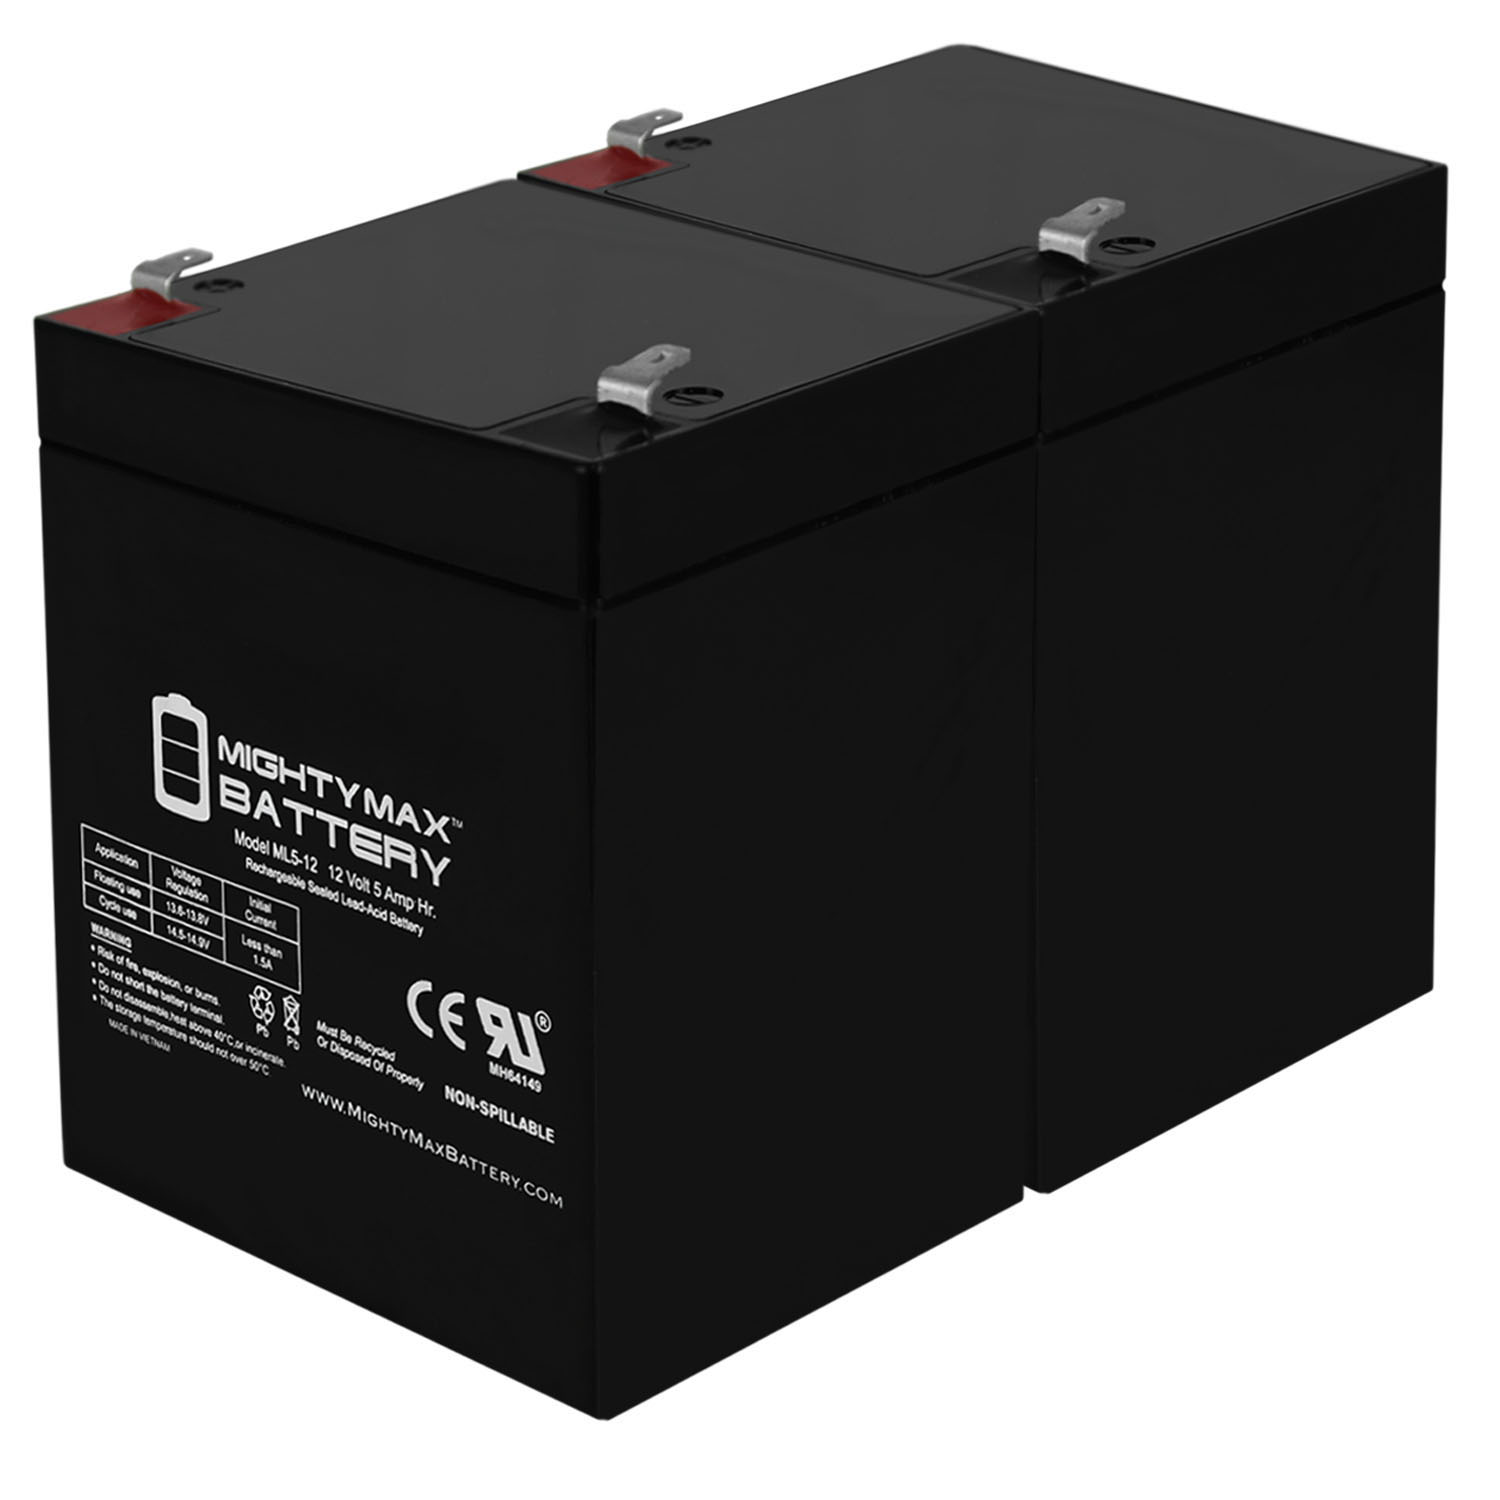 12V 5AH SLA Replacement Battery for Douglas Guardian DG12-5 - 2 Pack